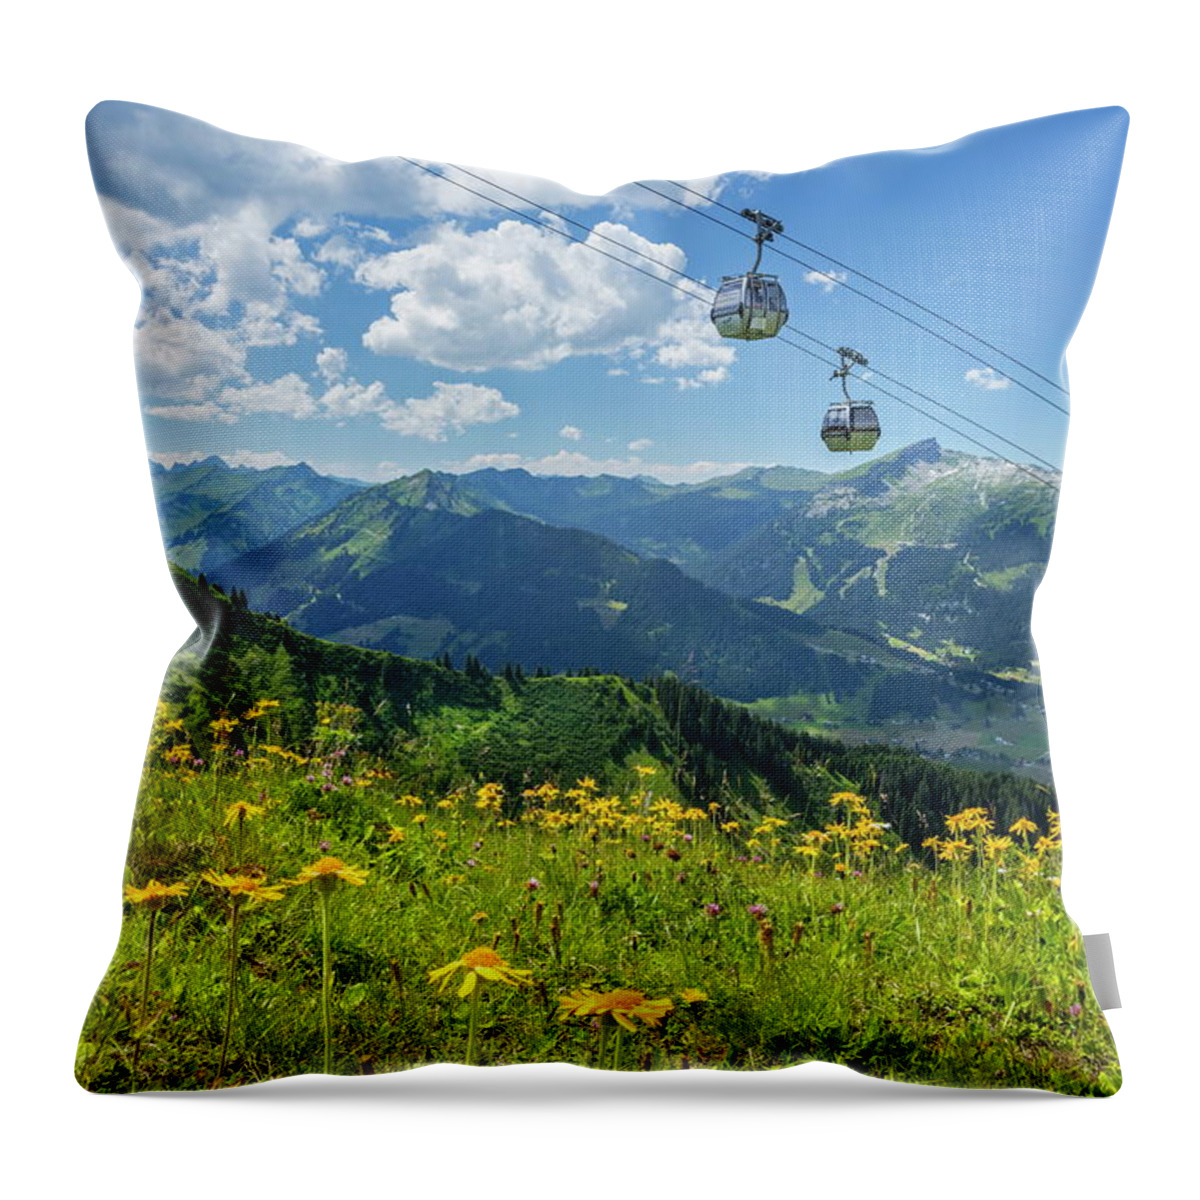 Estock Throw Pillow featuring the digital art Austria, Vorarlberg, Cable Car by Reinhard Schmid